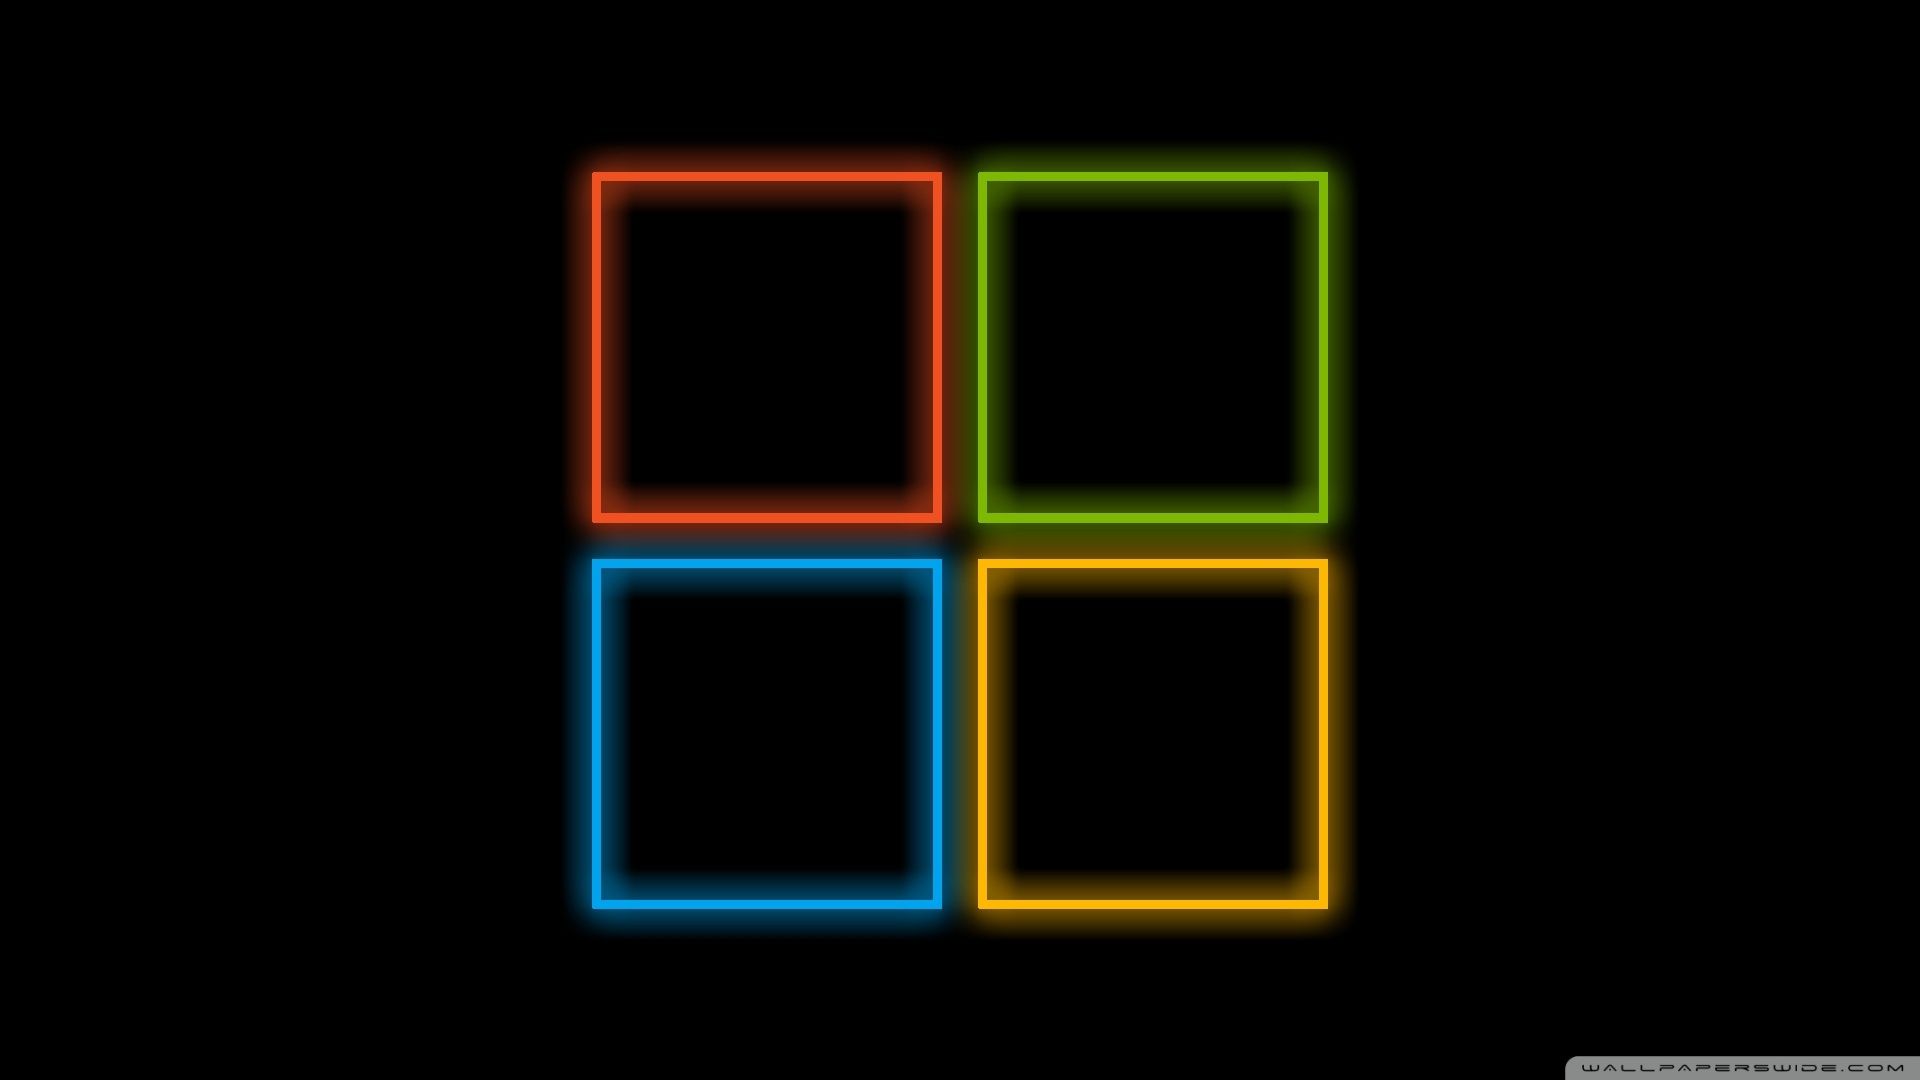 Windows 8 neon logo wallpaper .wallpaperafari.com